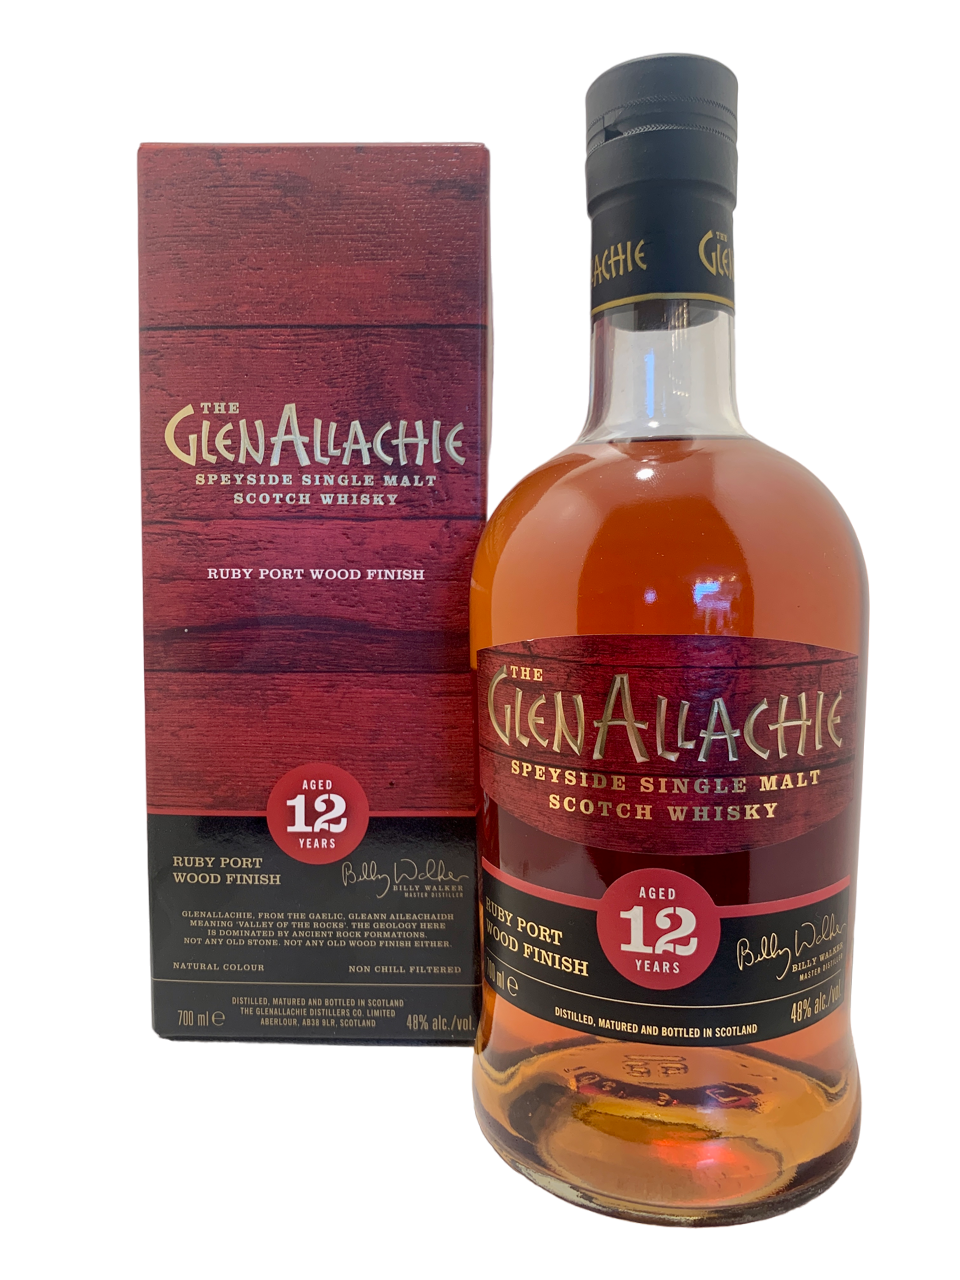 scotch whisky single malt écosse scotish spiritueux spirit speyside billy walker the glenallachie 12 years old ruby port wood finish